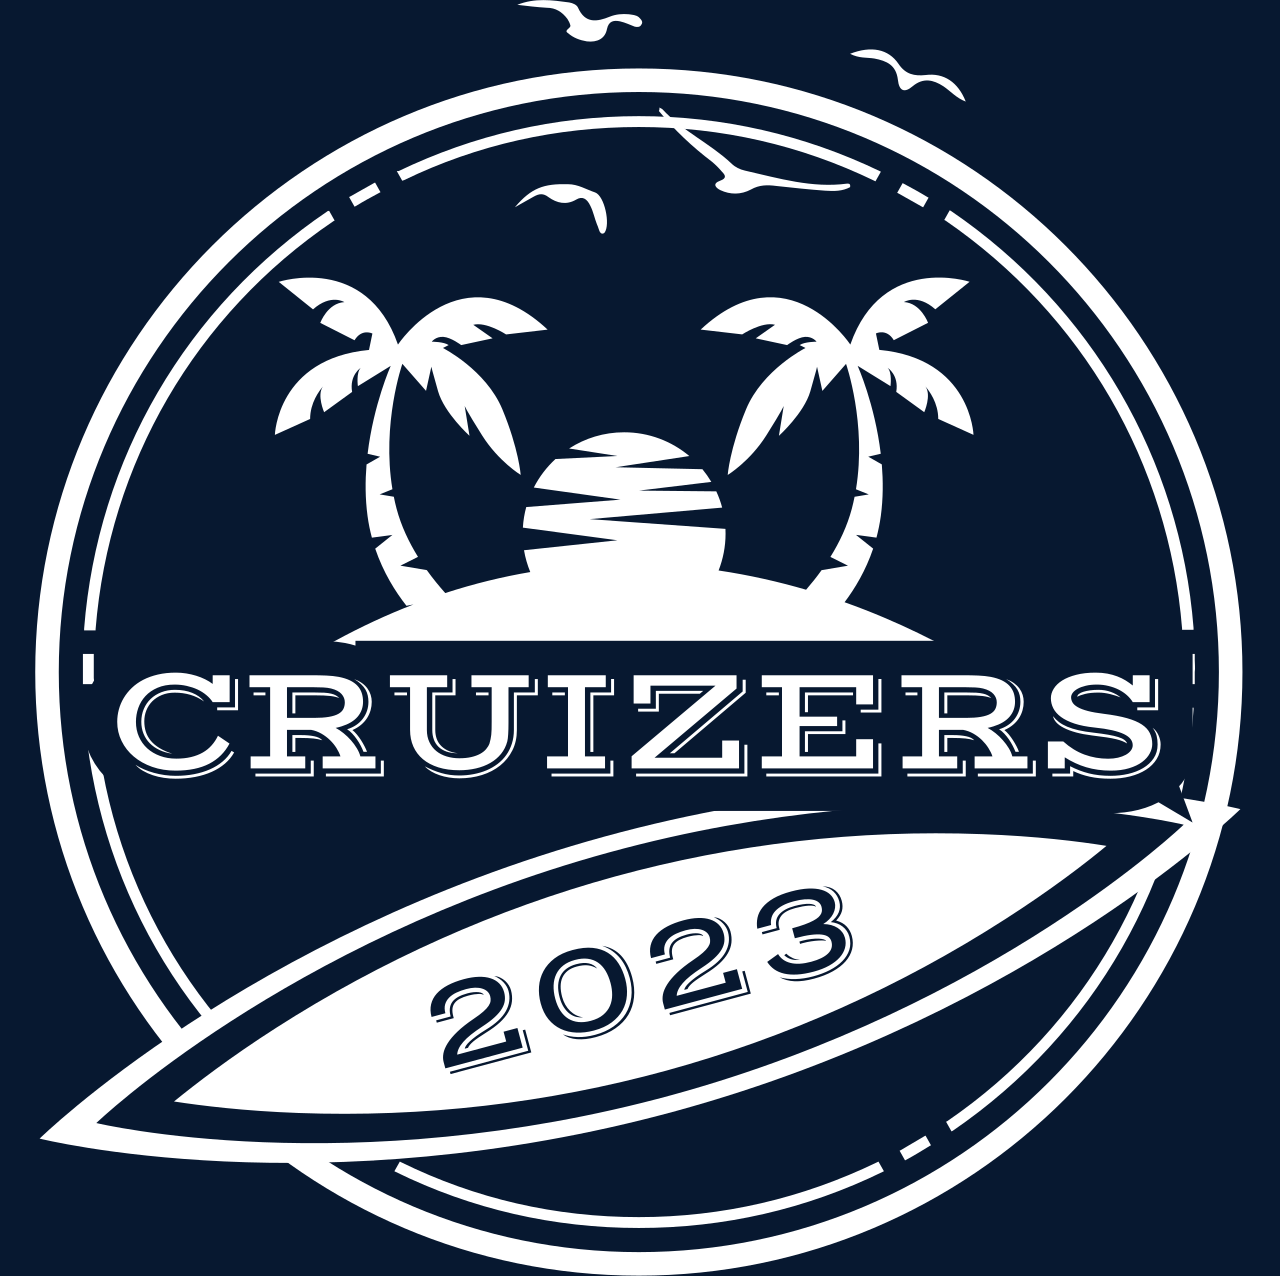 Cruizers's logo